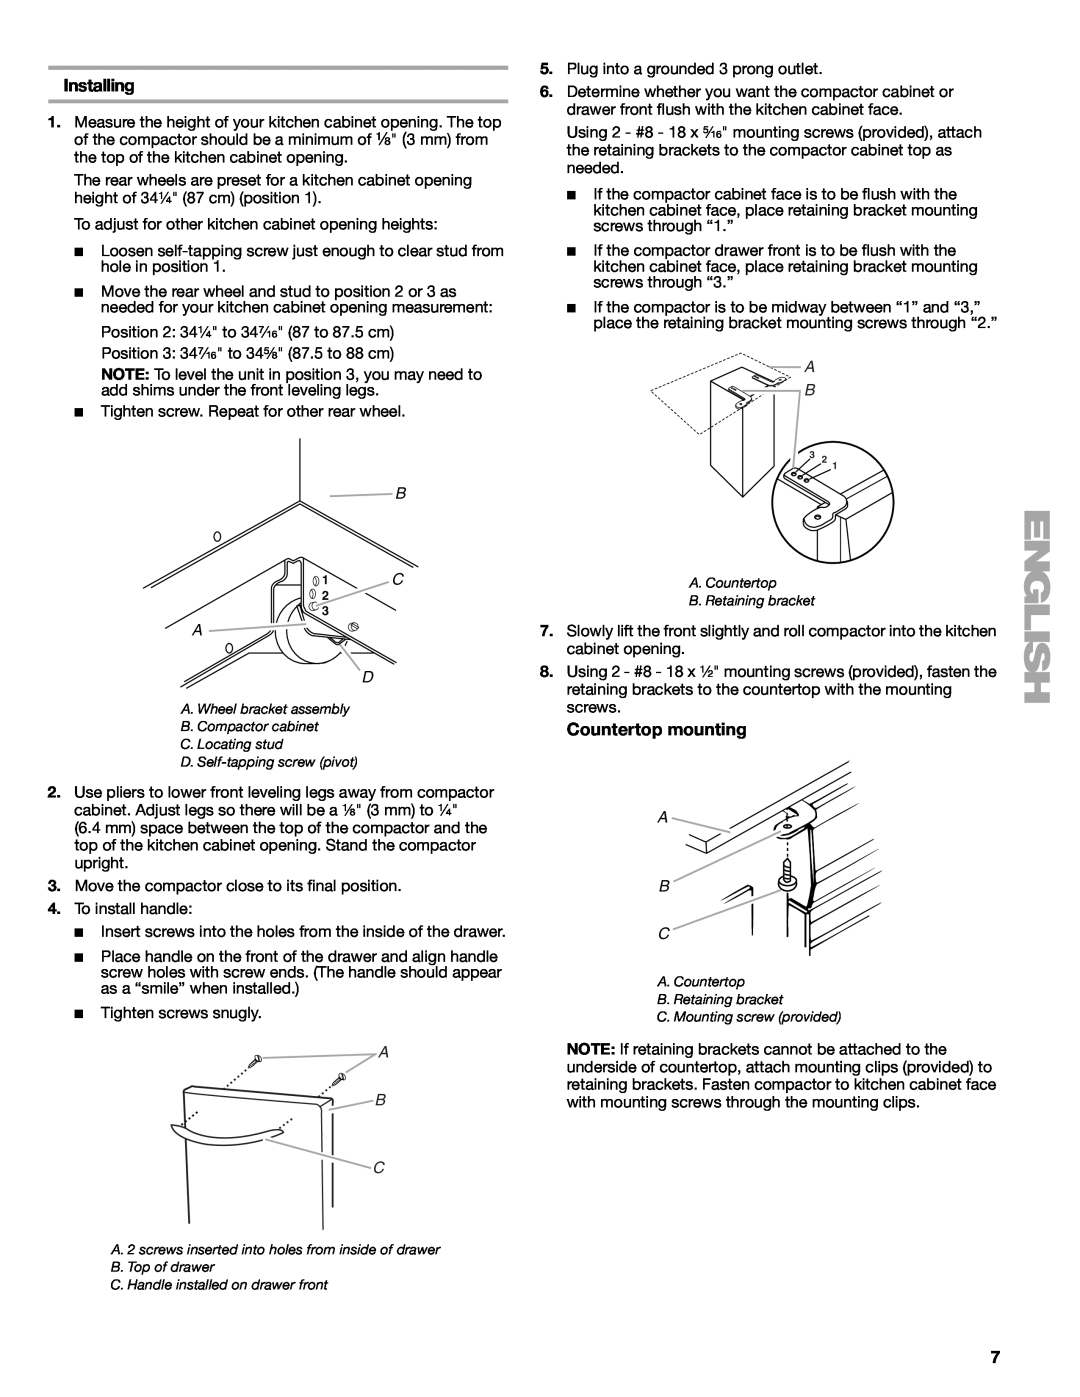 Kenmore 665.1363 manual Installing, Countertop mounting, A B C 